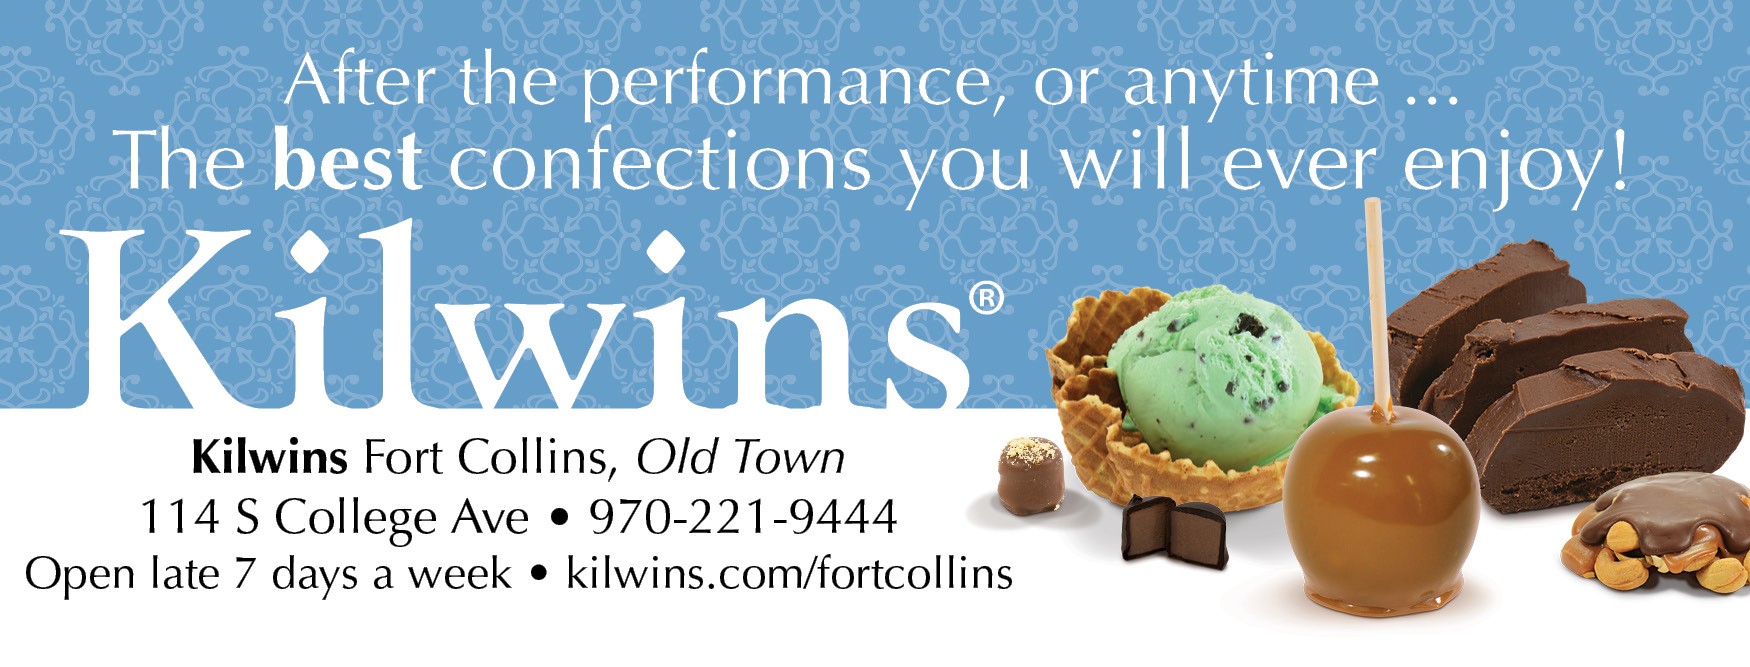 Kilwins Fort Collins